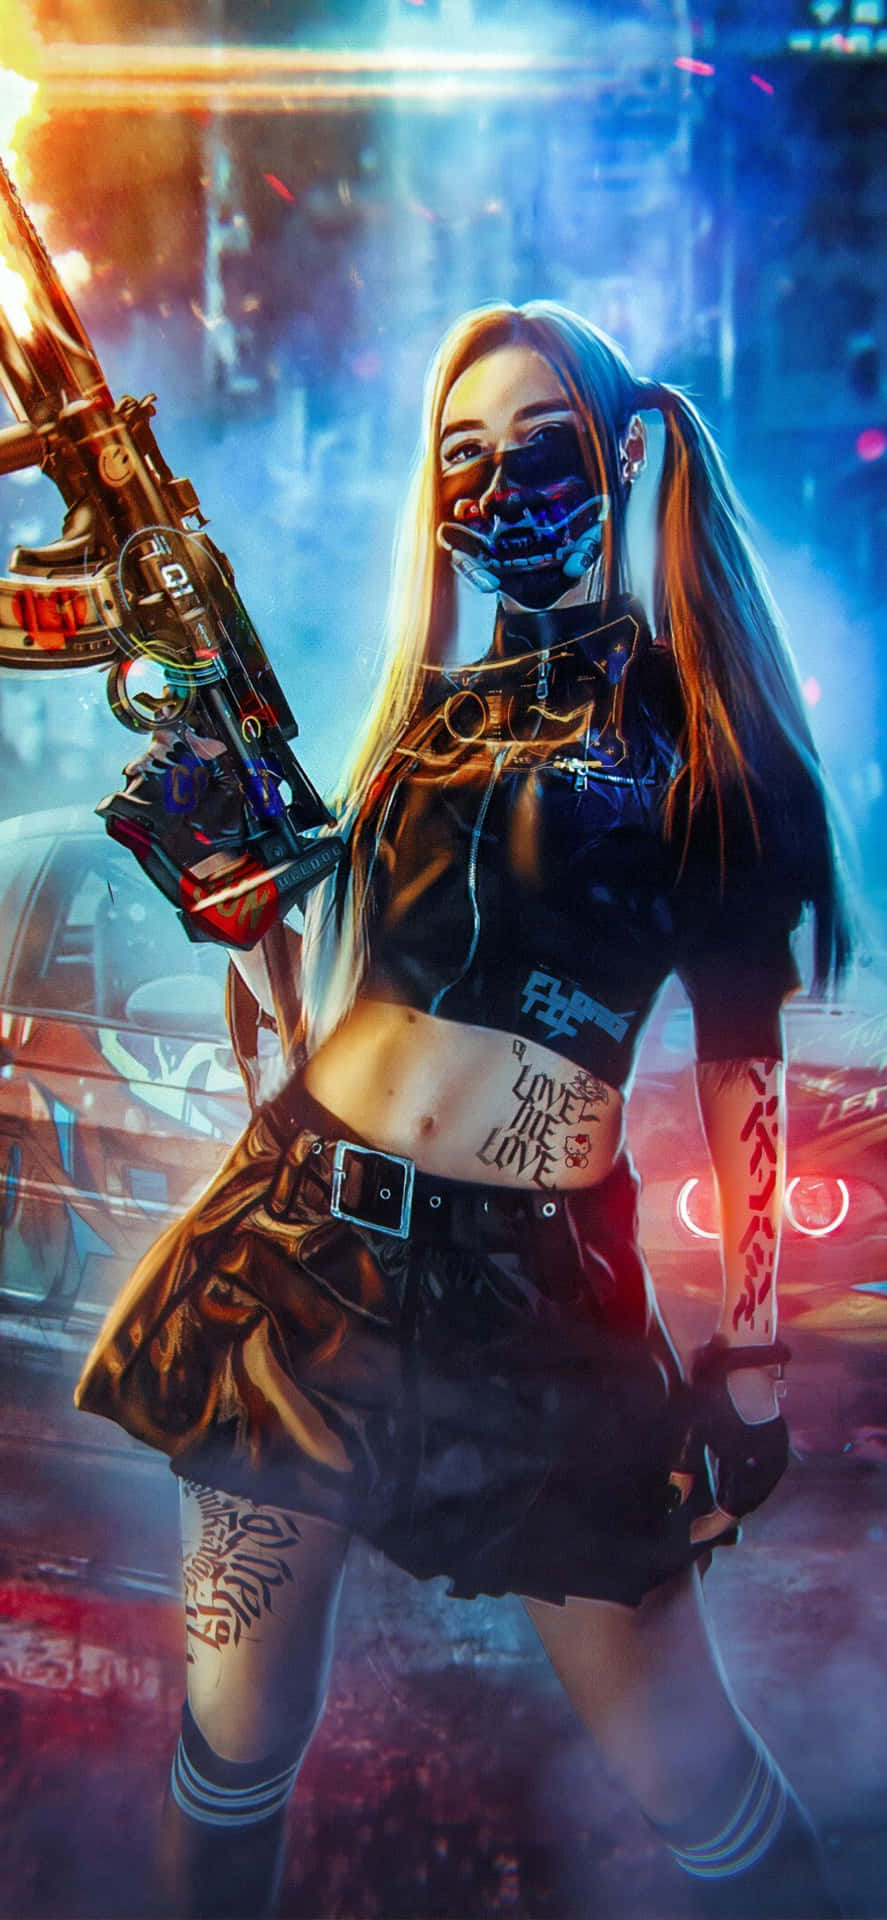 Cyberpunk Anime Warrior Girl Wallpaper